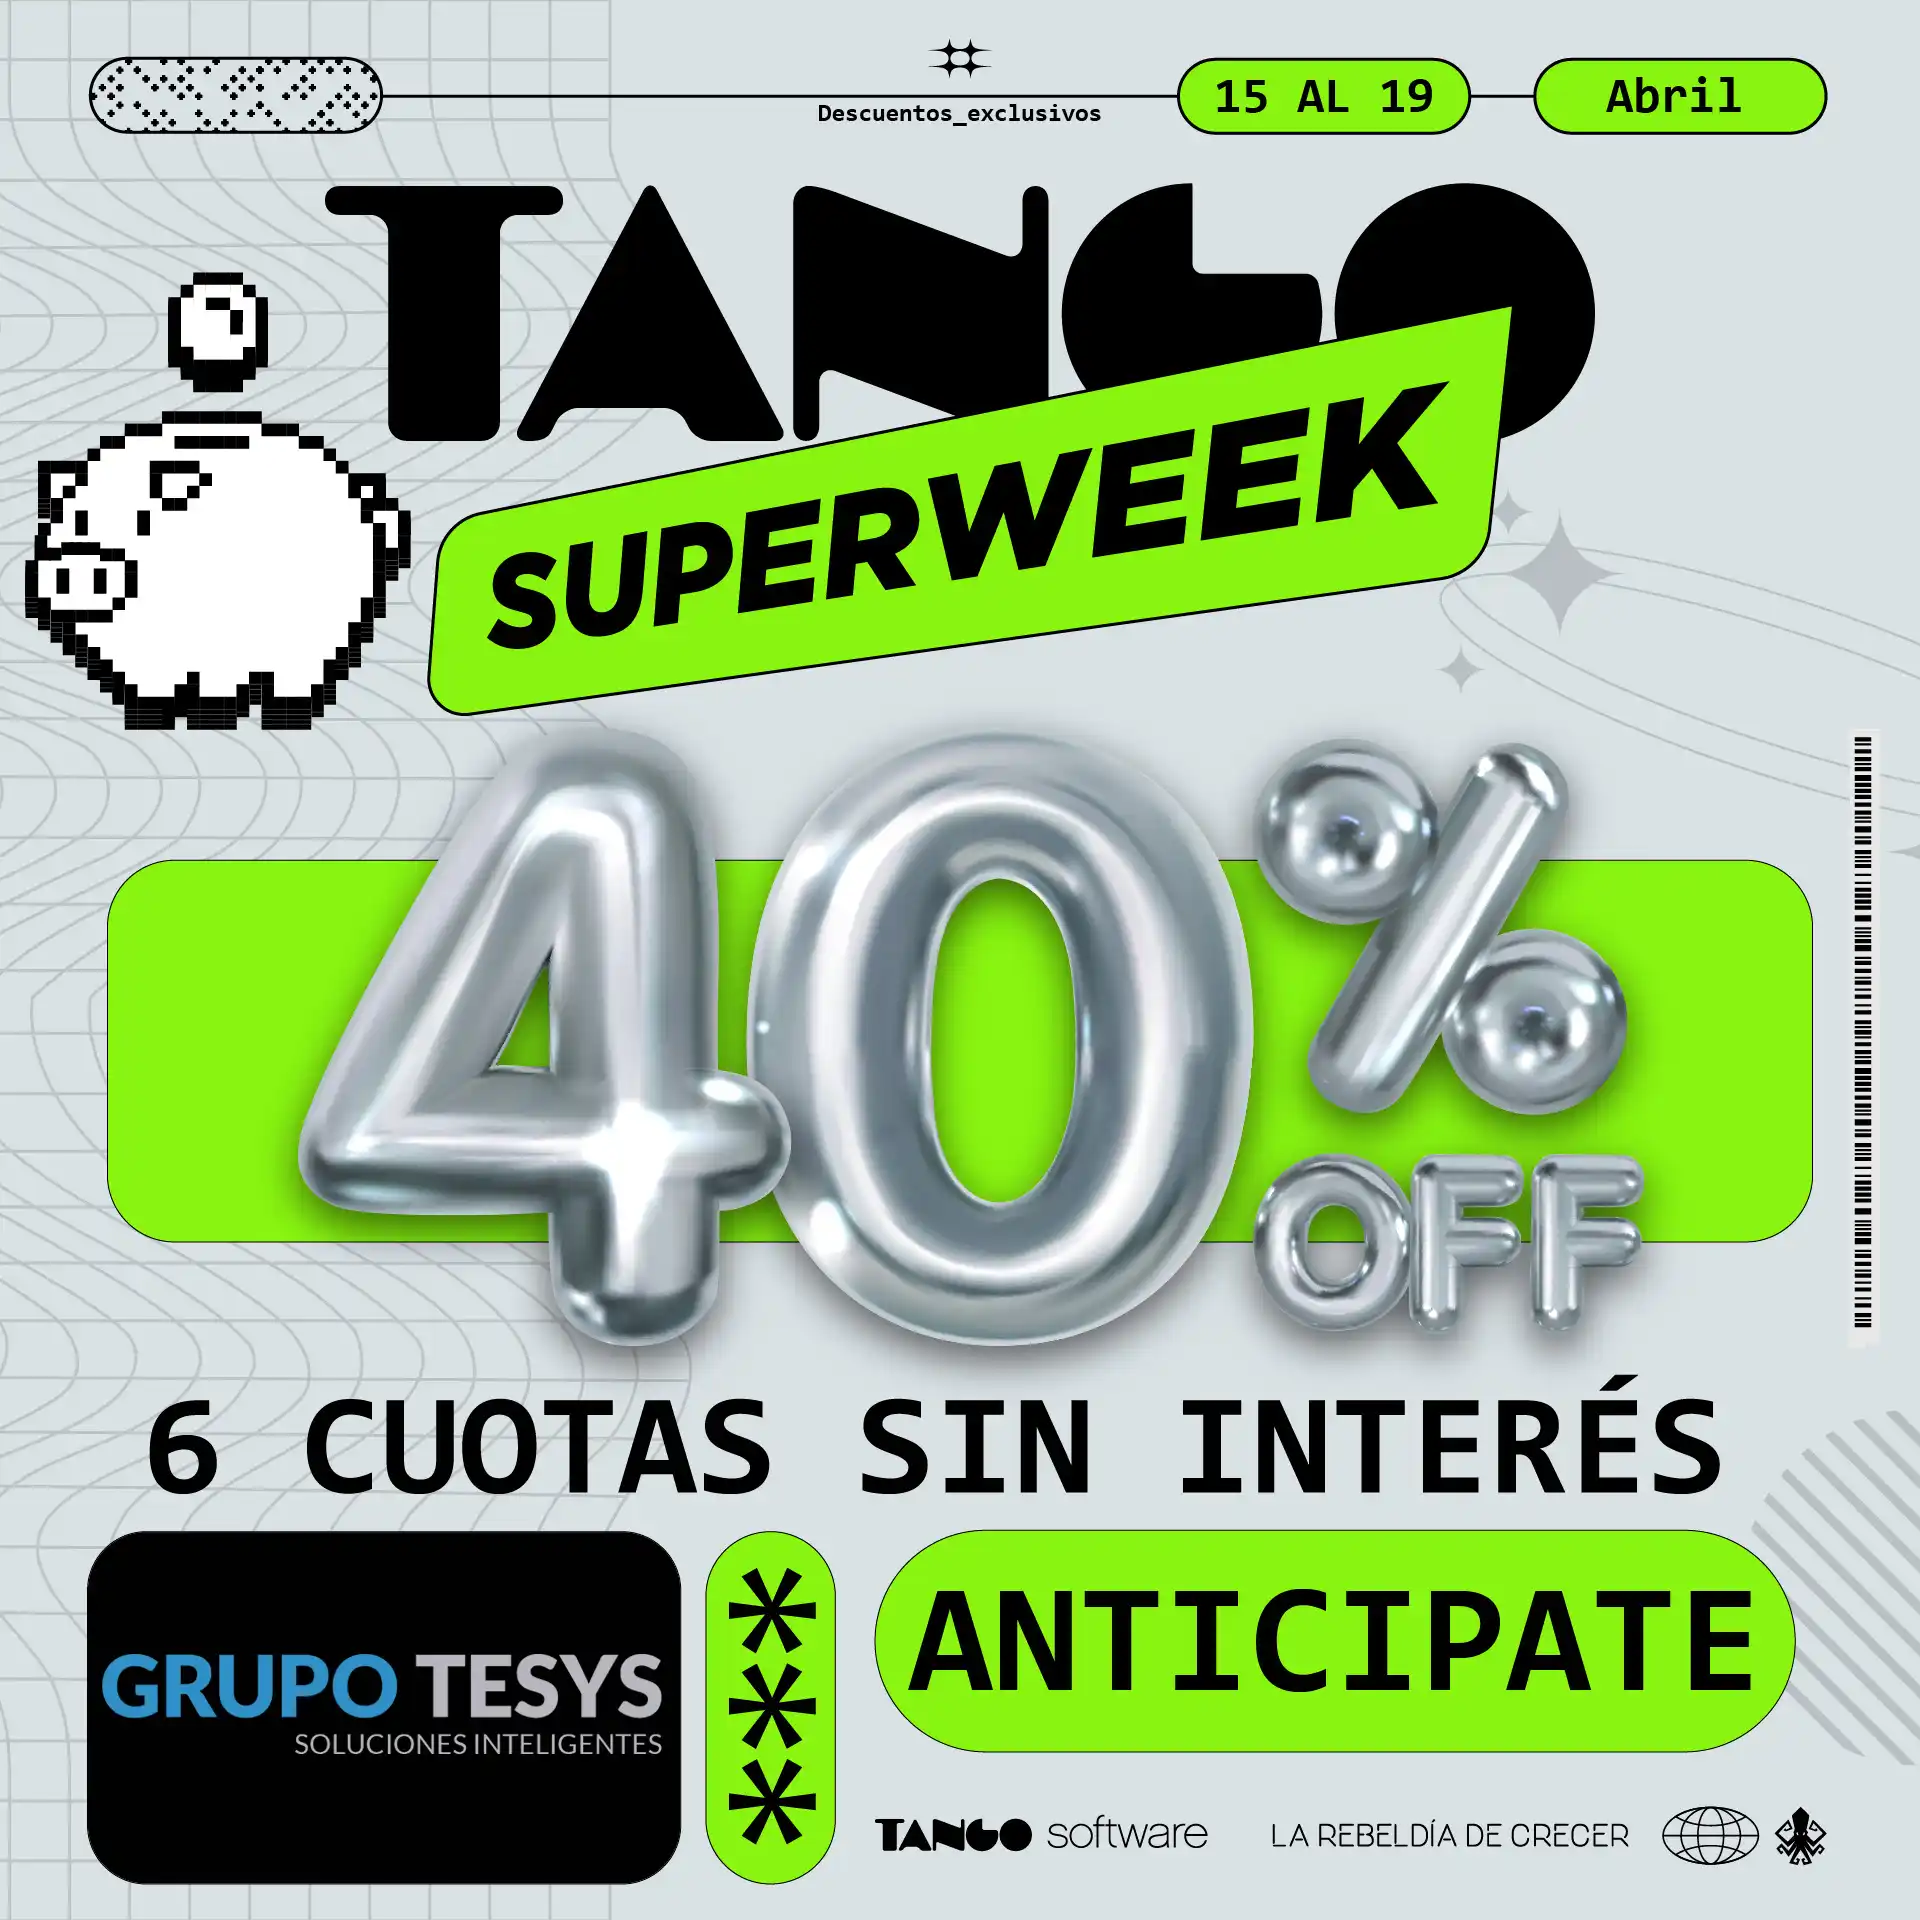 Super week Tango